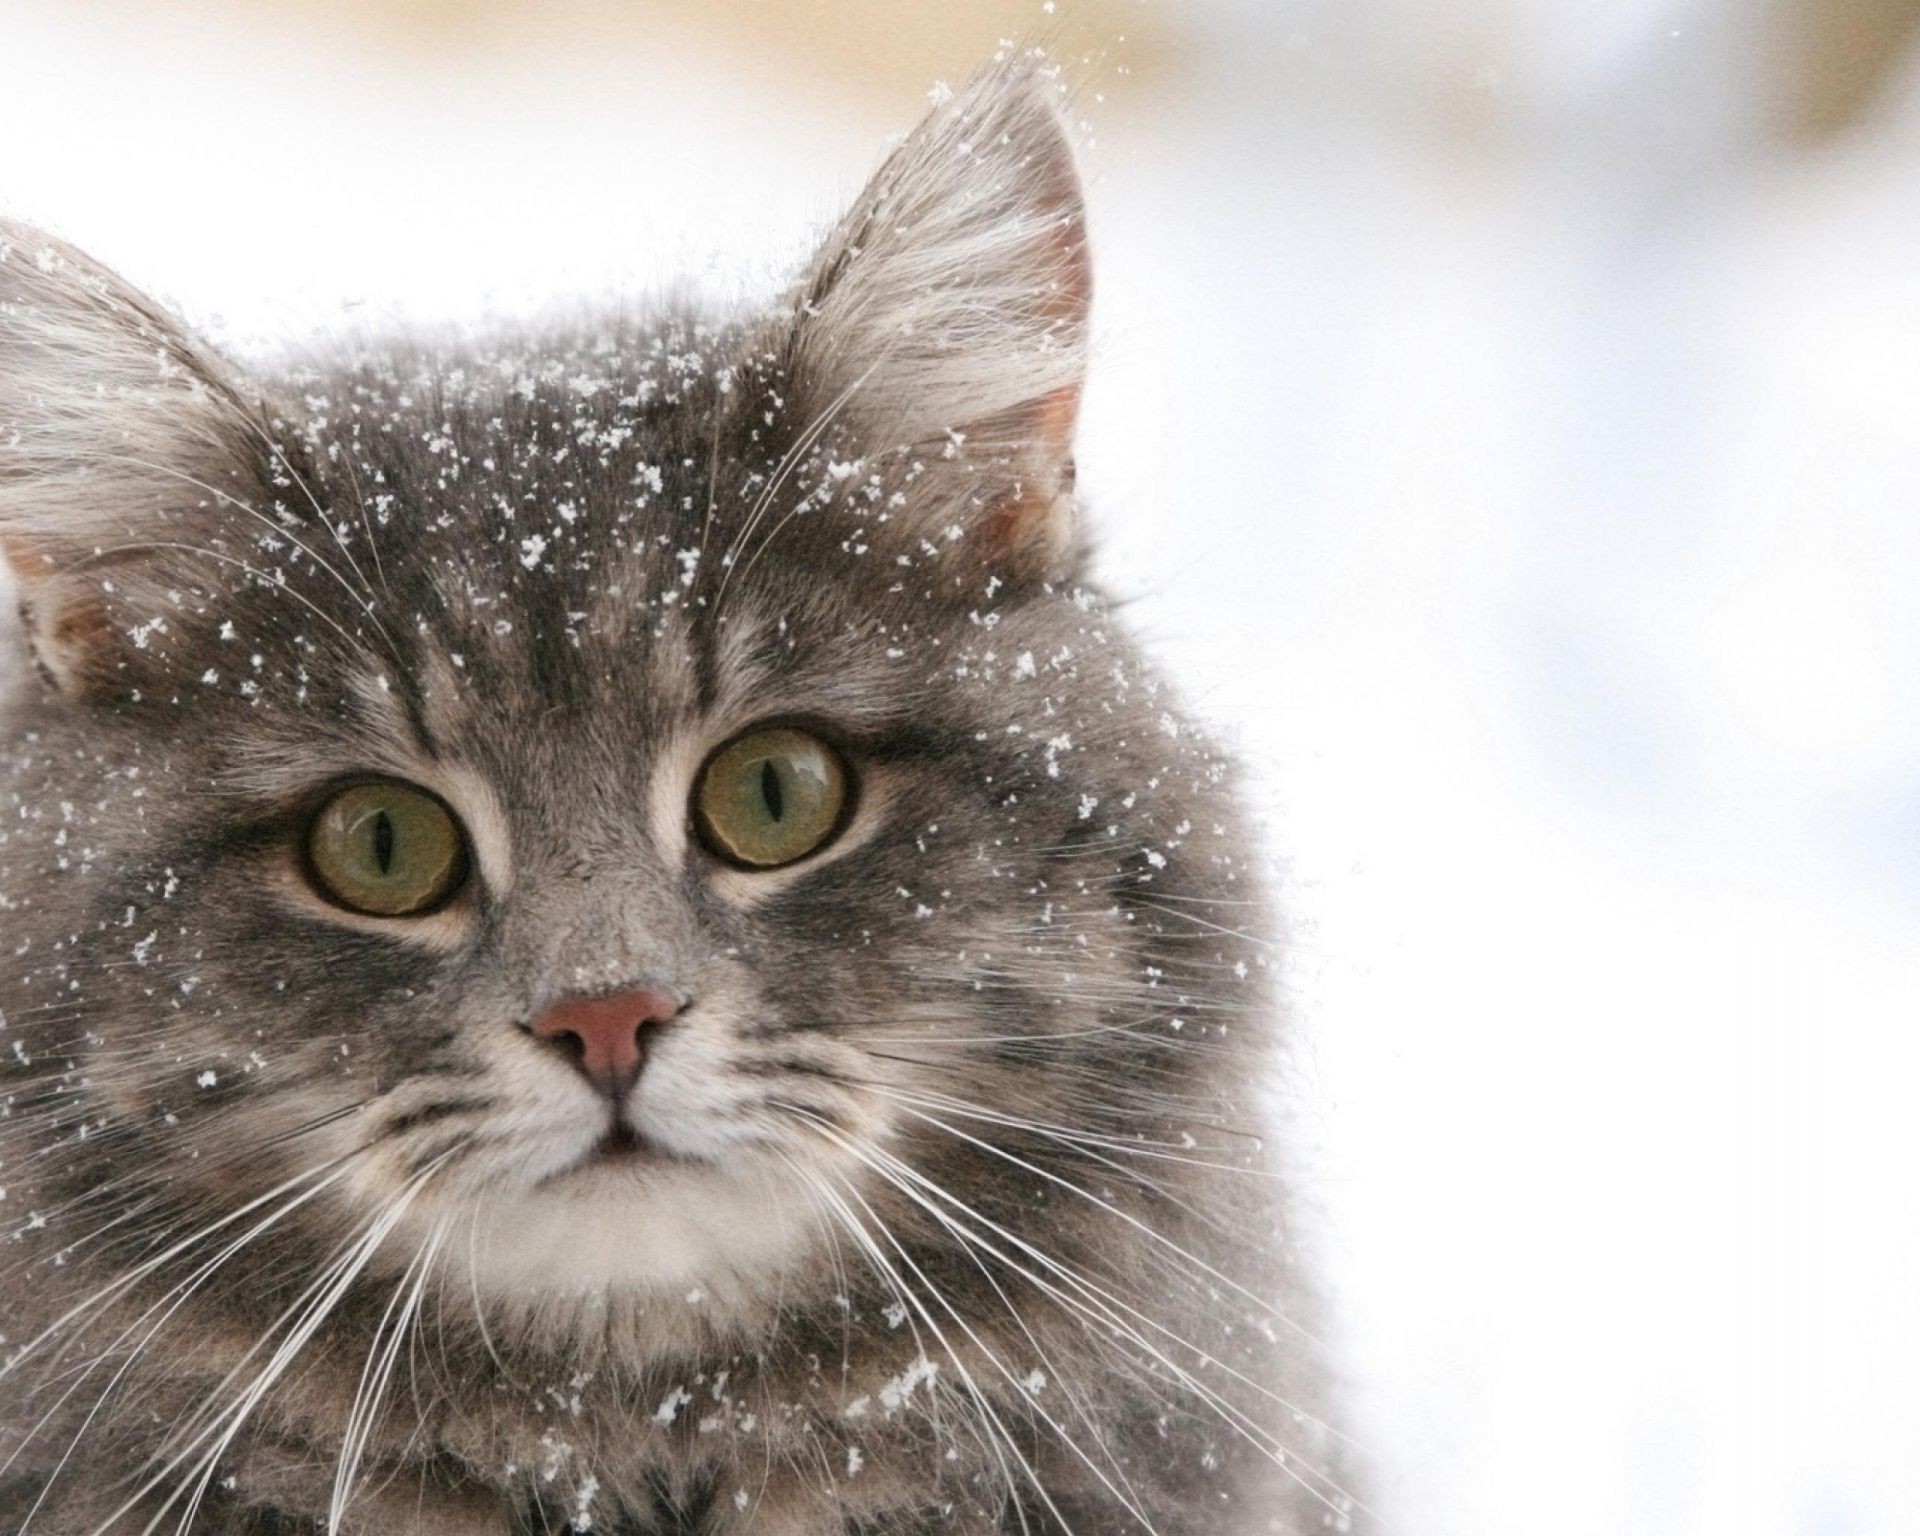 Fluffy fur cat in the snow wallpaper